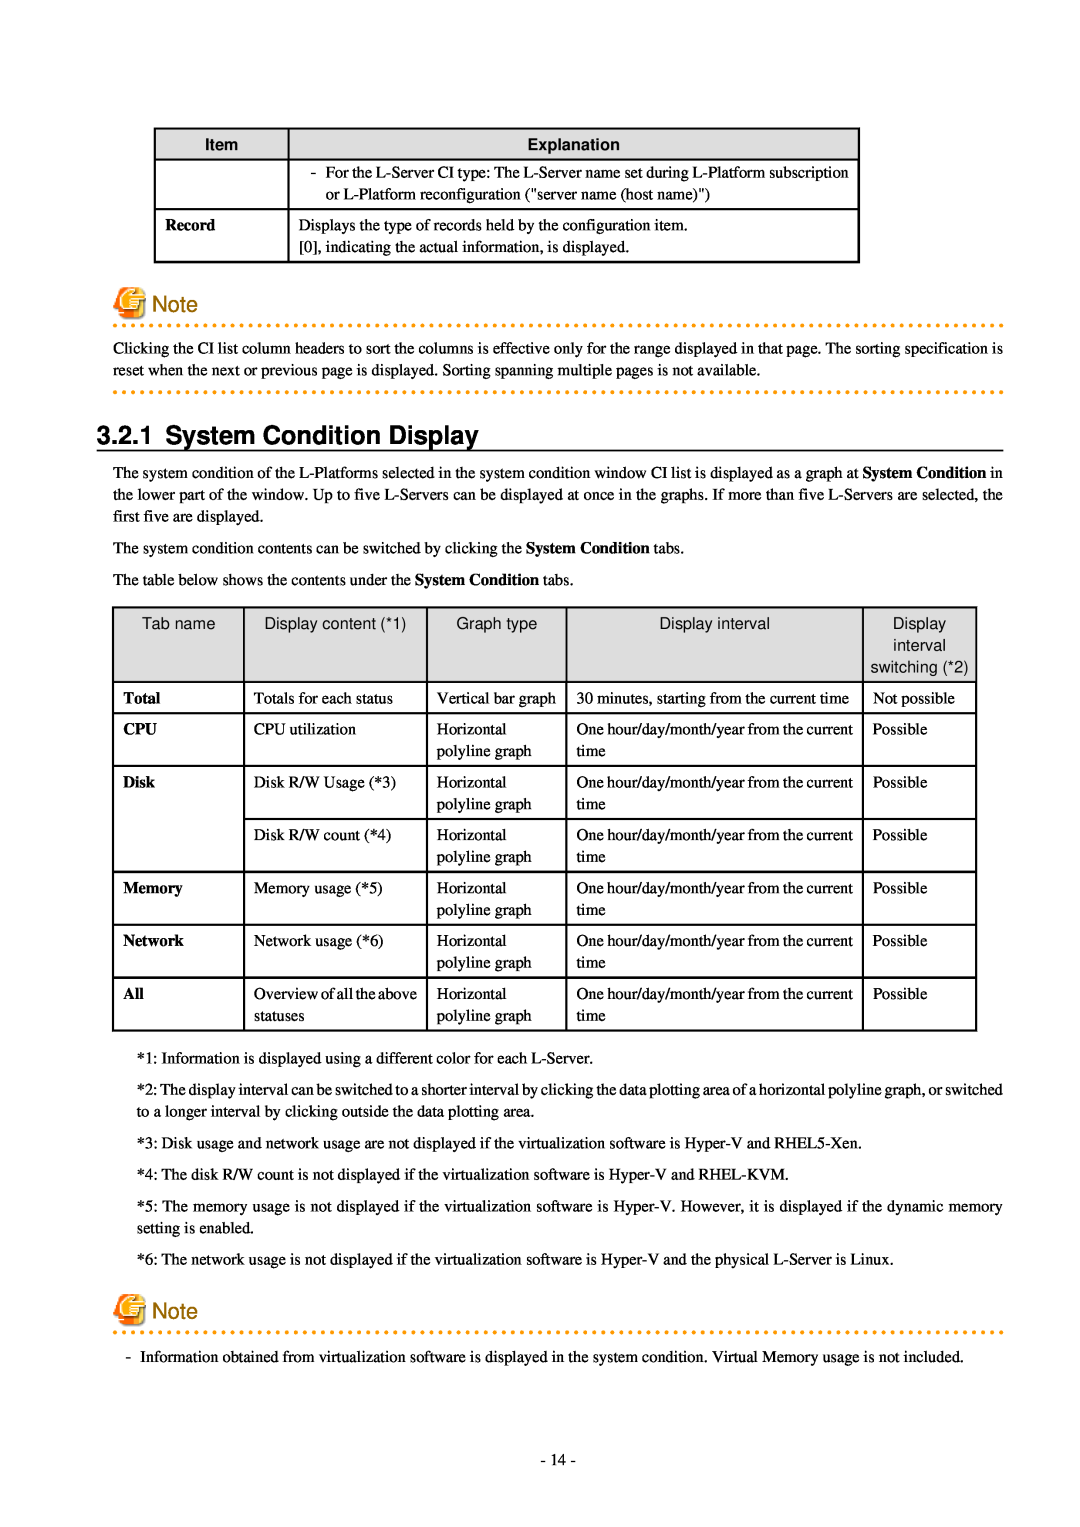 Fujitsu V3.0.0 manual System Condition Display, Explanation, Record, Total, Disk, Memory, Network 